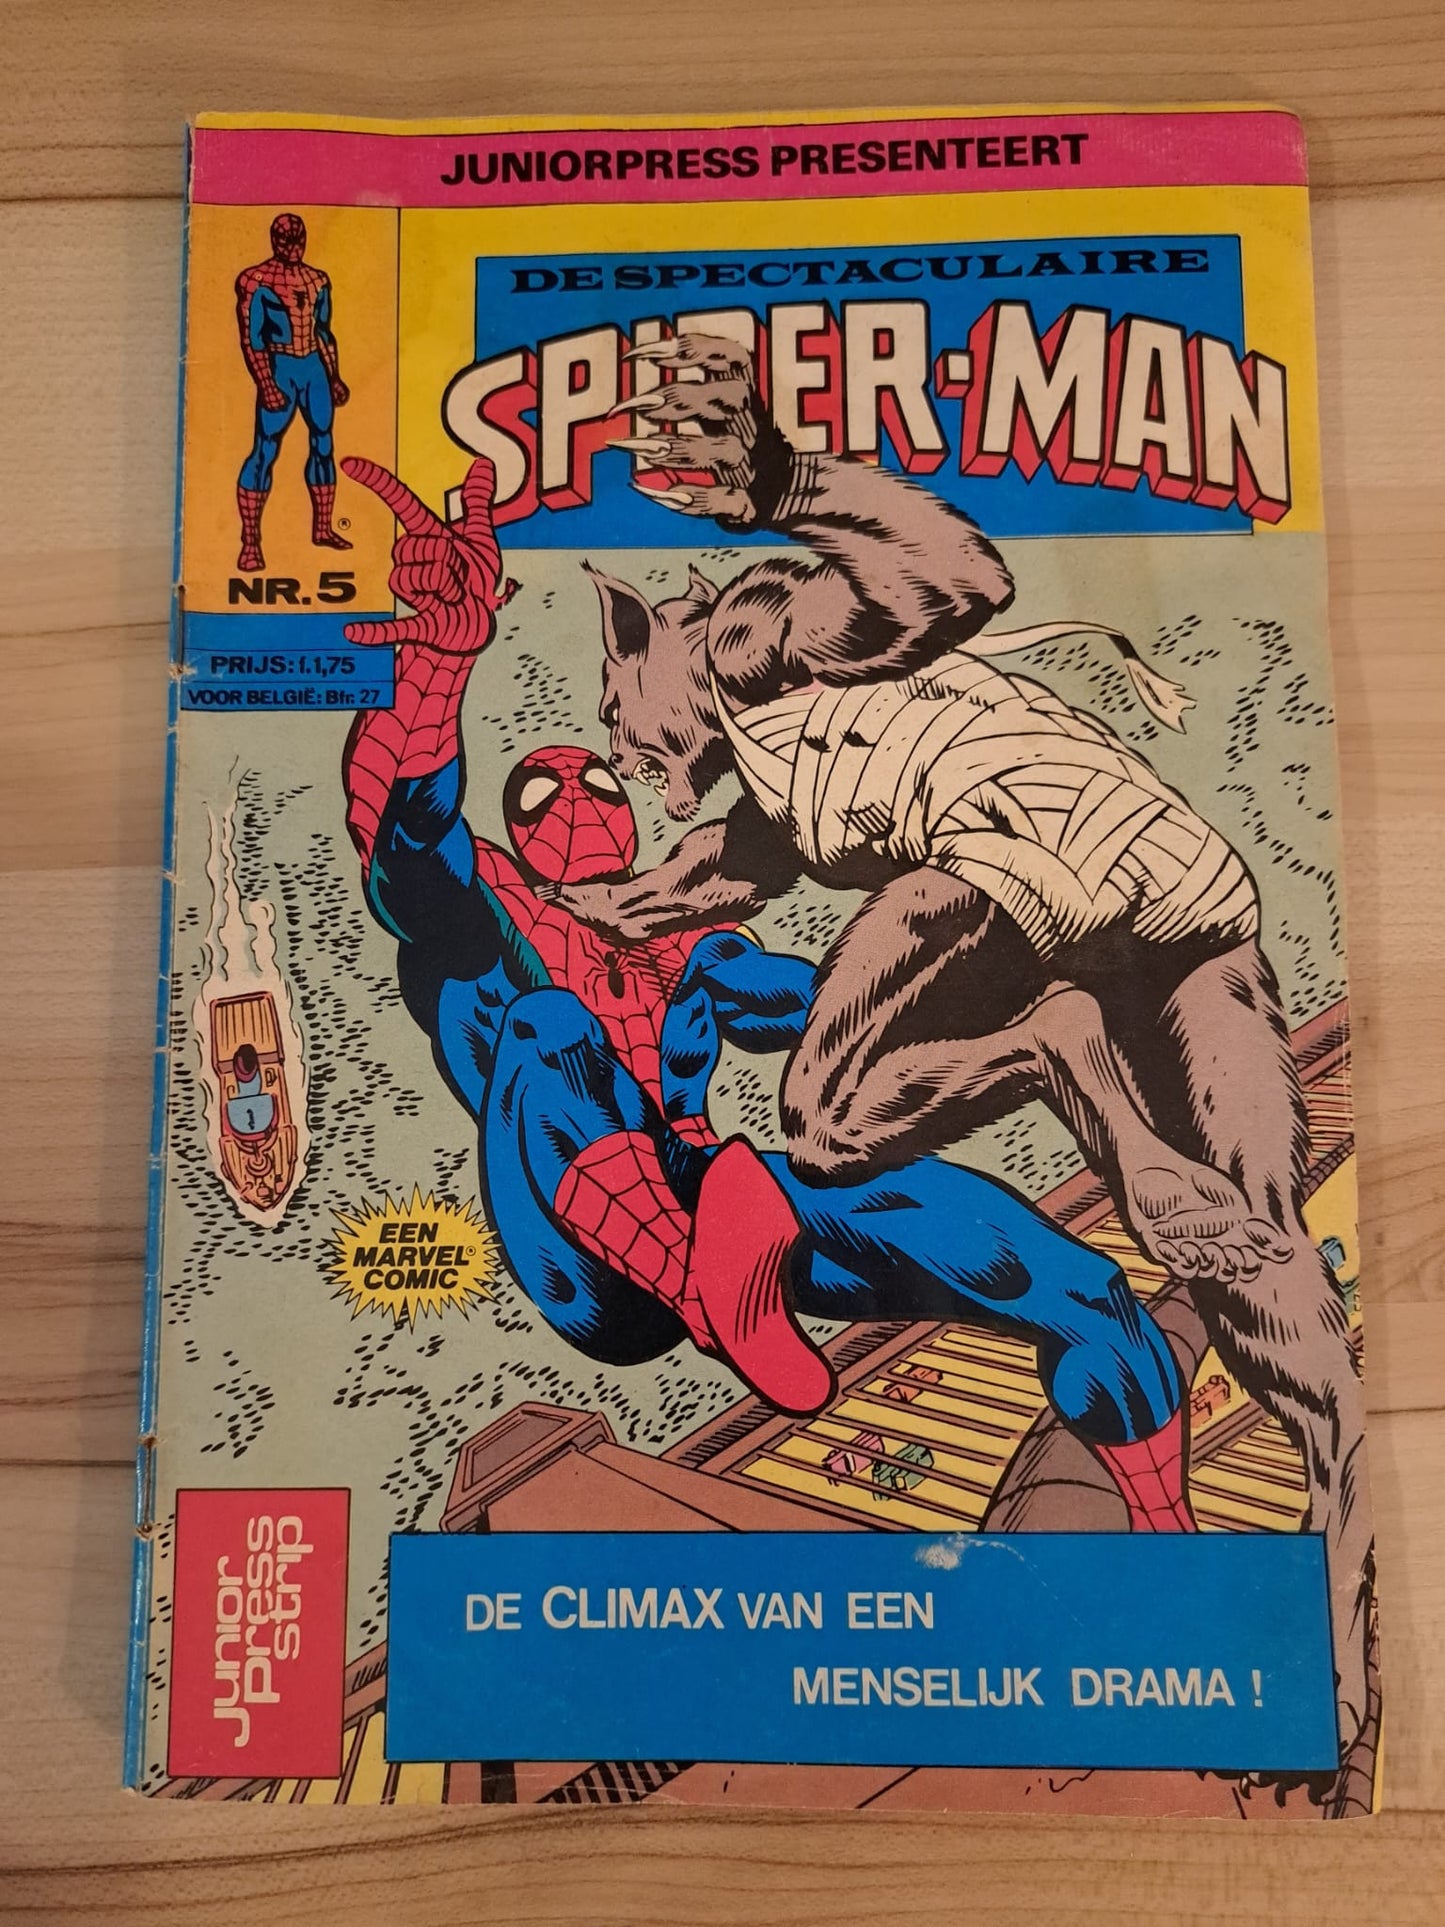 De spektakulaire spiderman #5